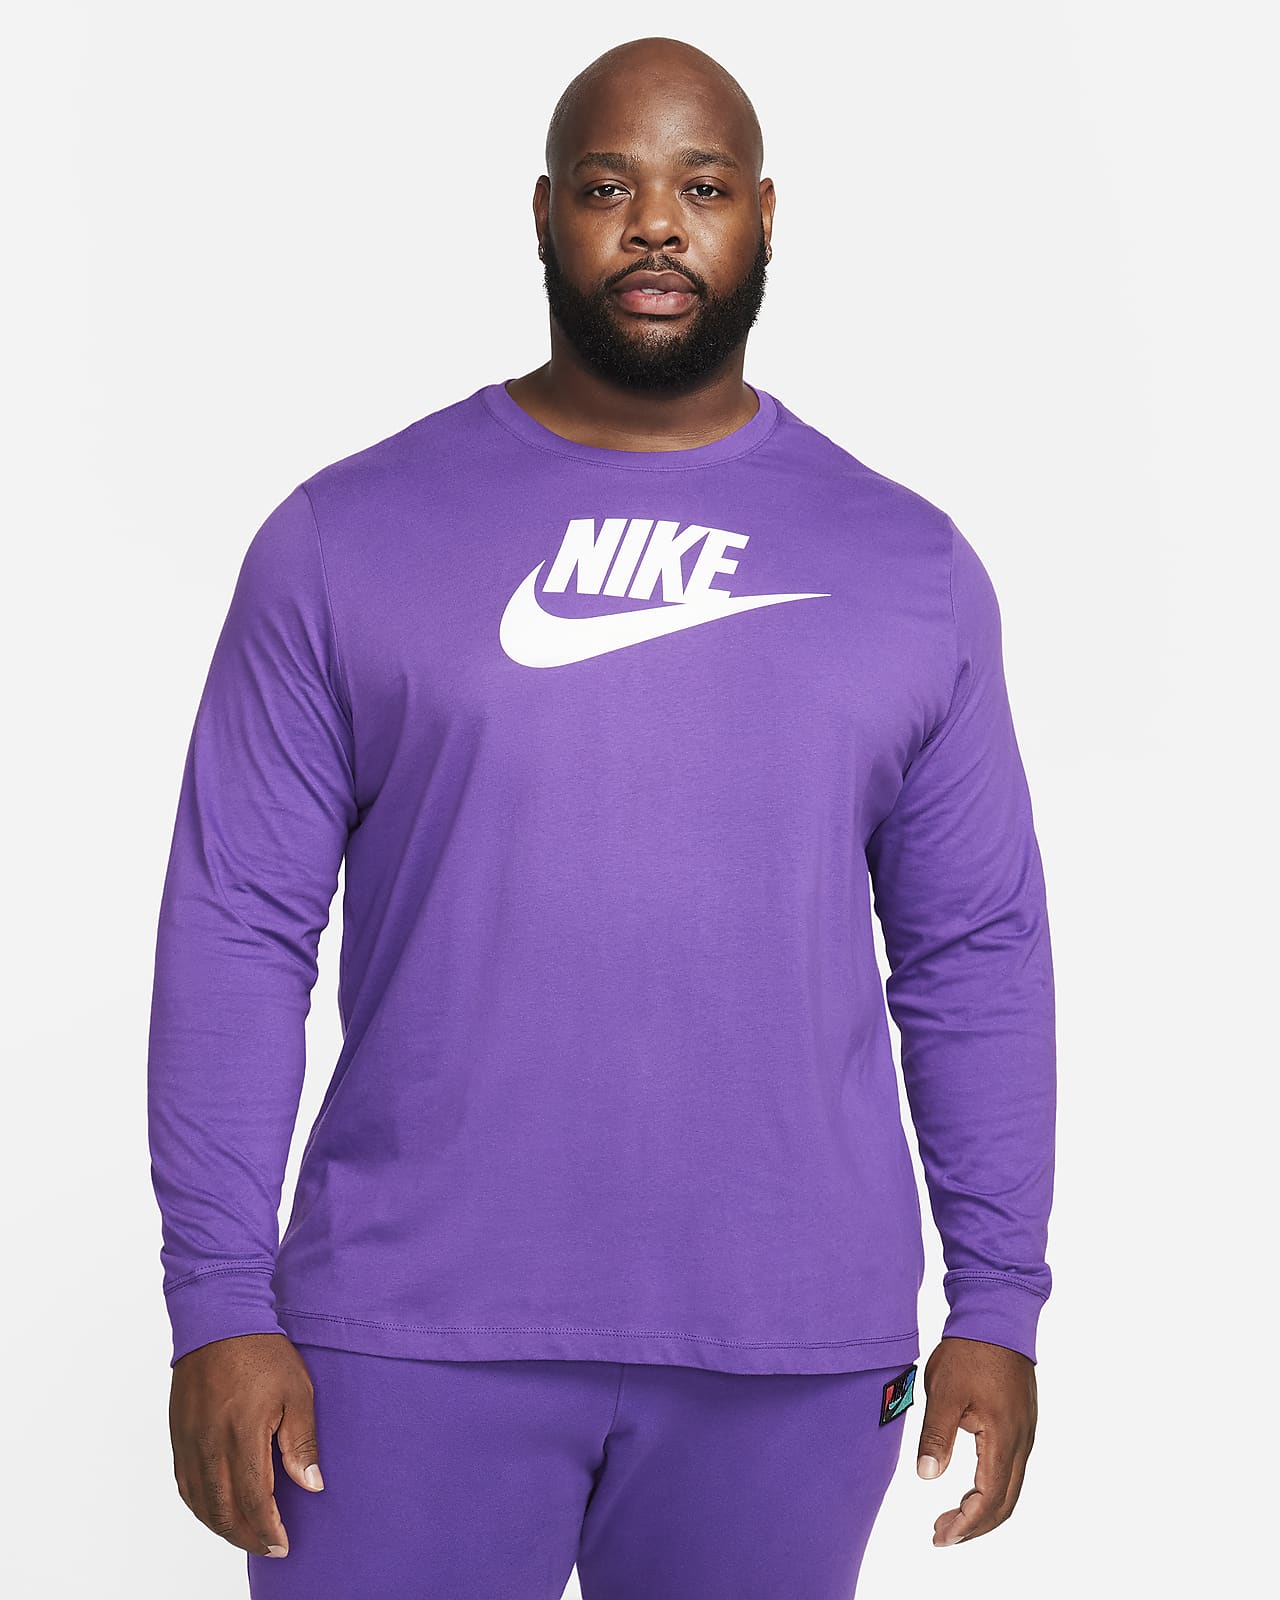 MLB Men's Shirt - Purple - M